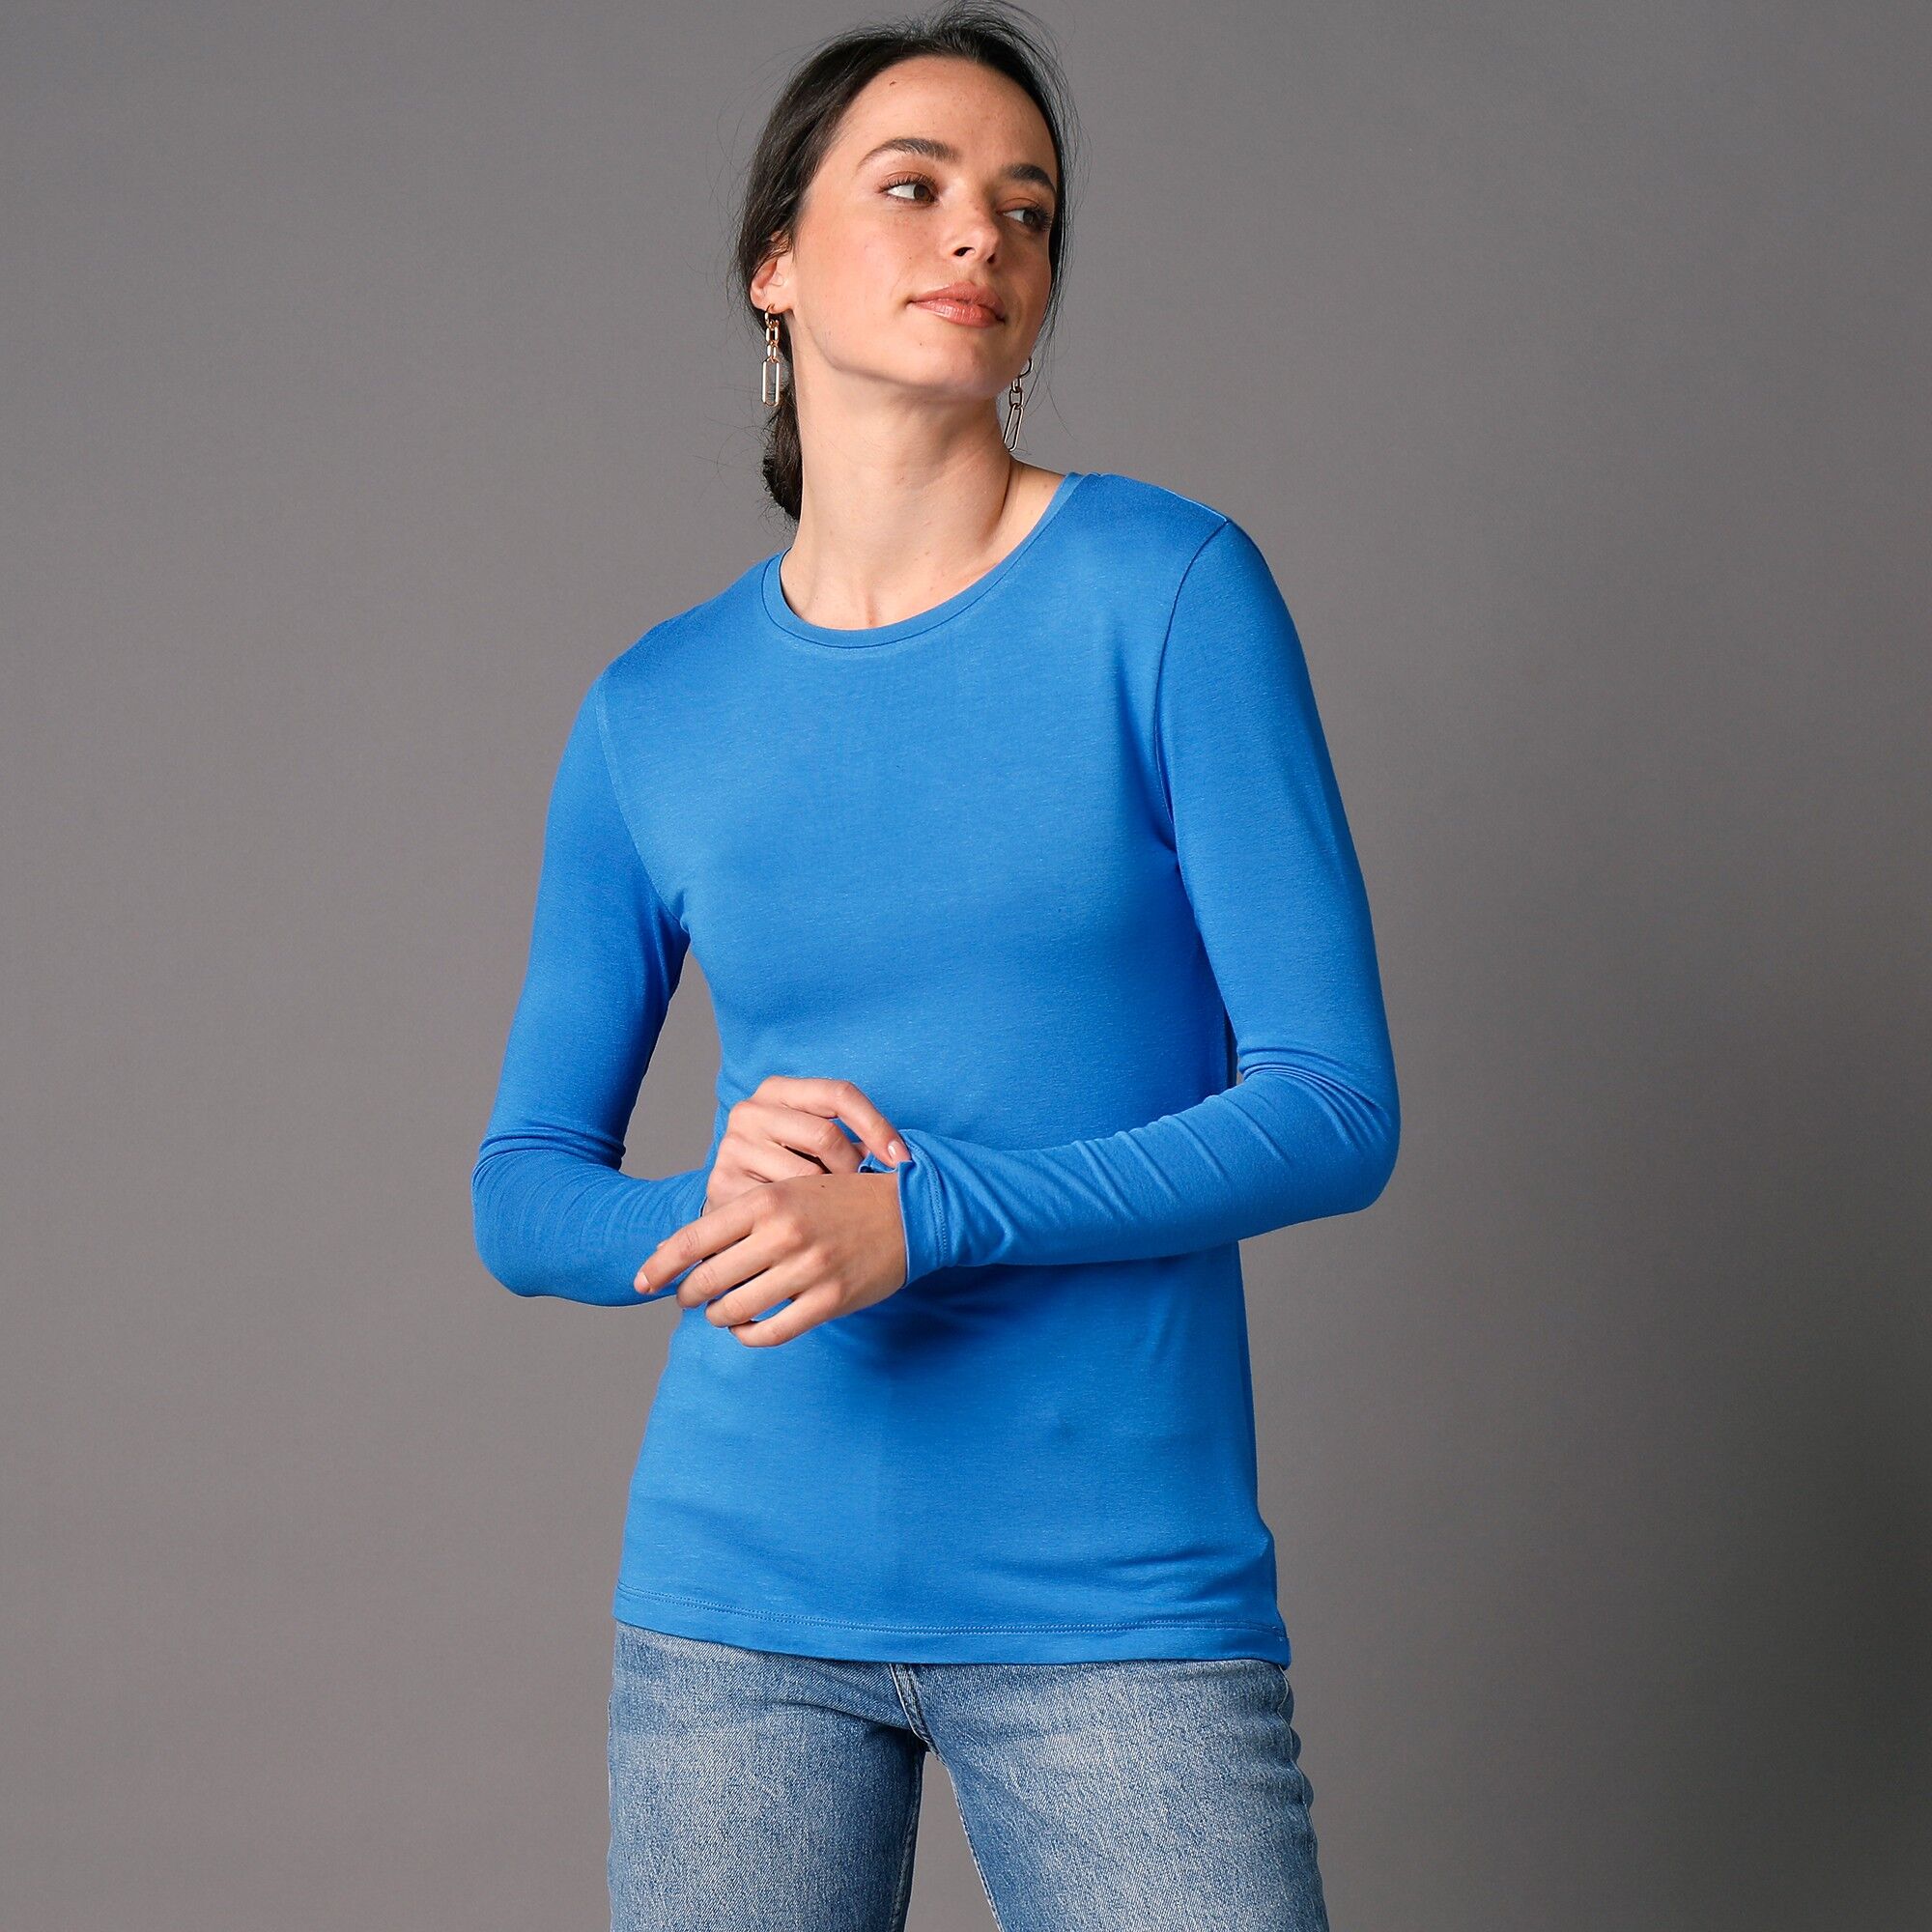 Colors&Co Tee-shirt uni col rond viscose stretch - 46/48 - Bleu - Colors&co  - Vert - Size: 54